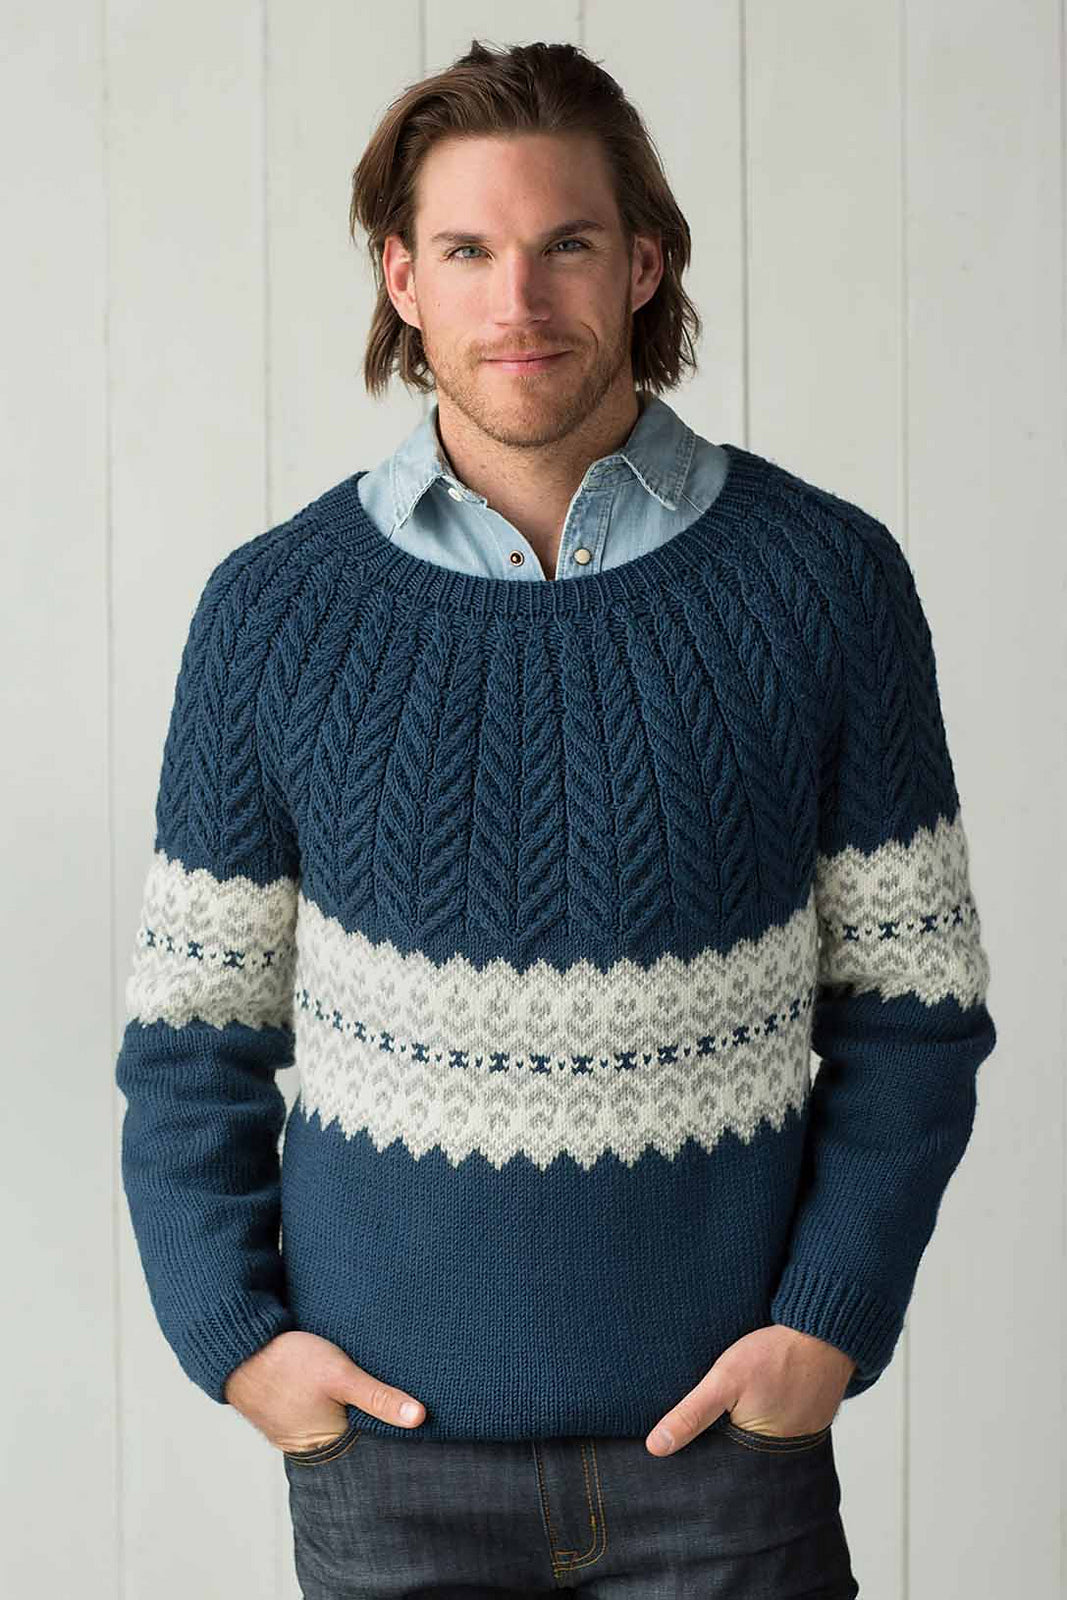 Bergen Peak sweater knitting pattern by Irina Anikeeva